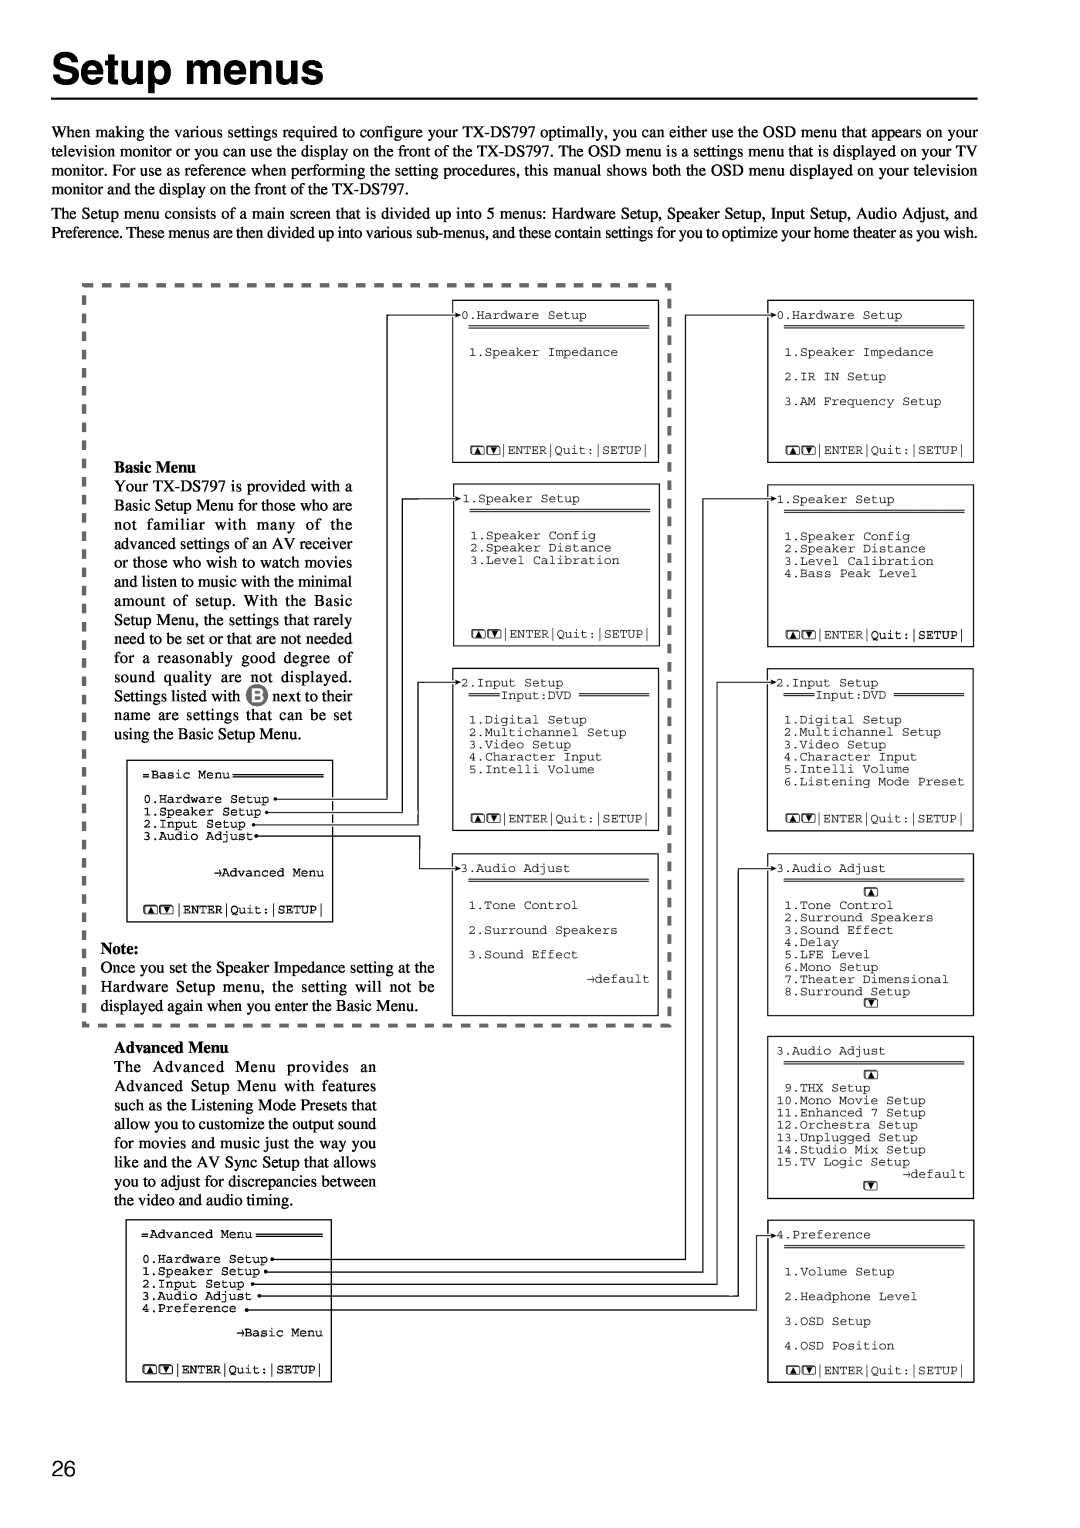 Onkyo TX-DS797 instruction manual Setup menus, Basic Menu, Advanced Menu 